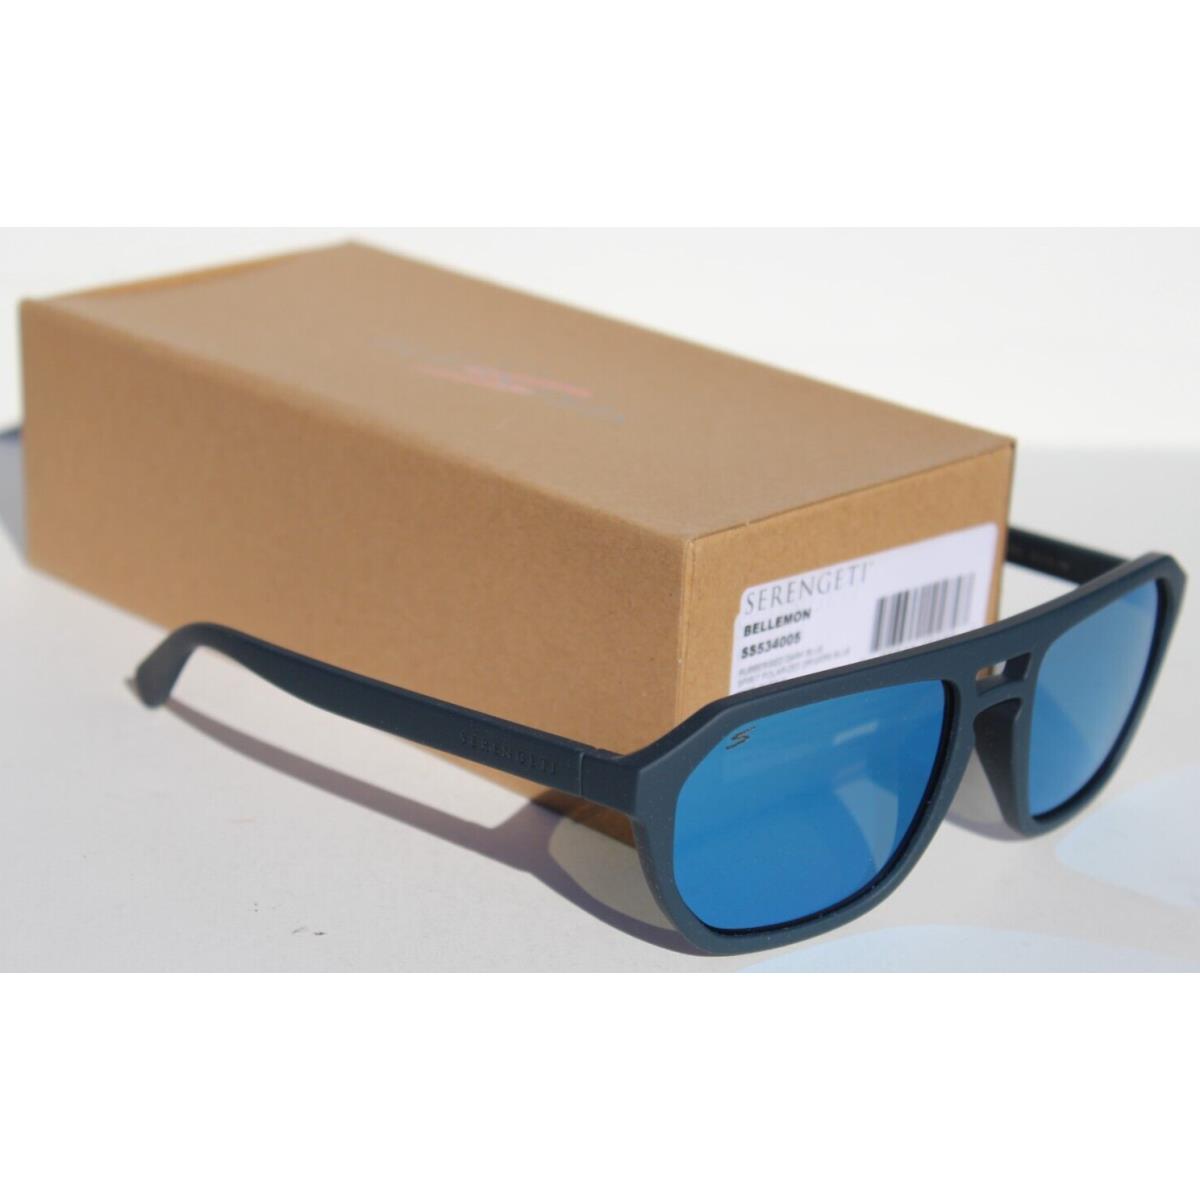 Serengeti Bellemon Polarized Sunglasses Blue/spirit Blue Drivers SS534005 Italy